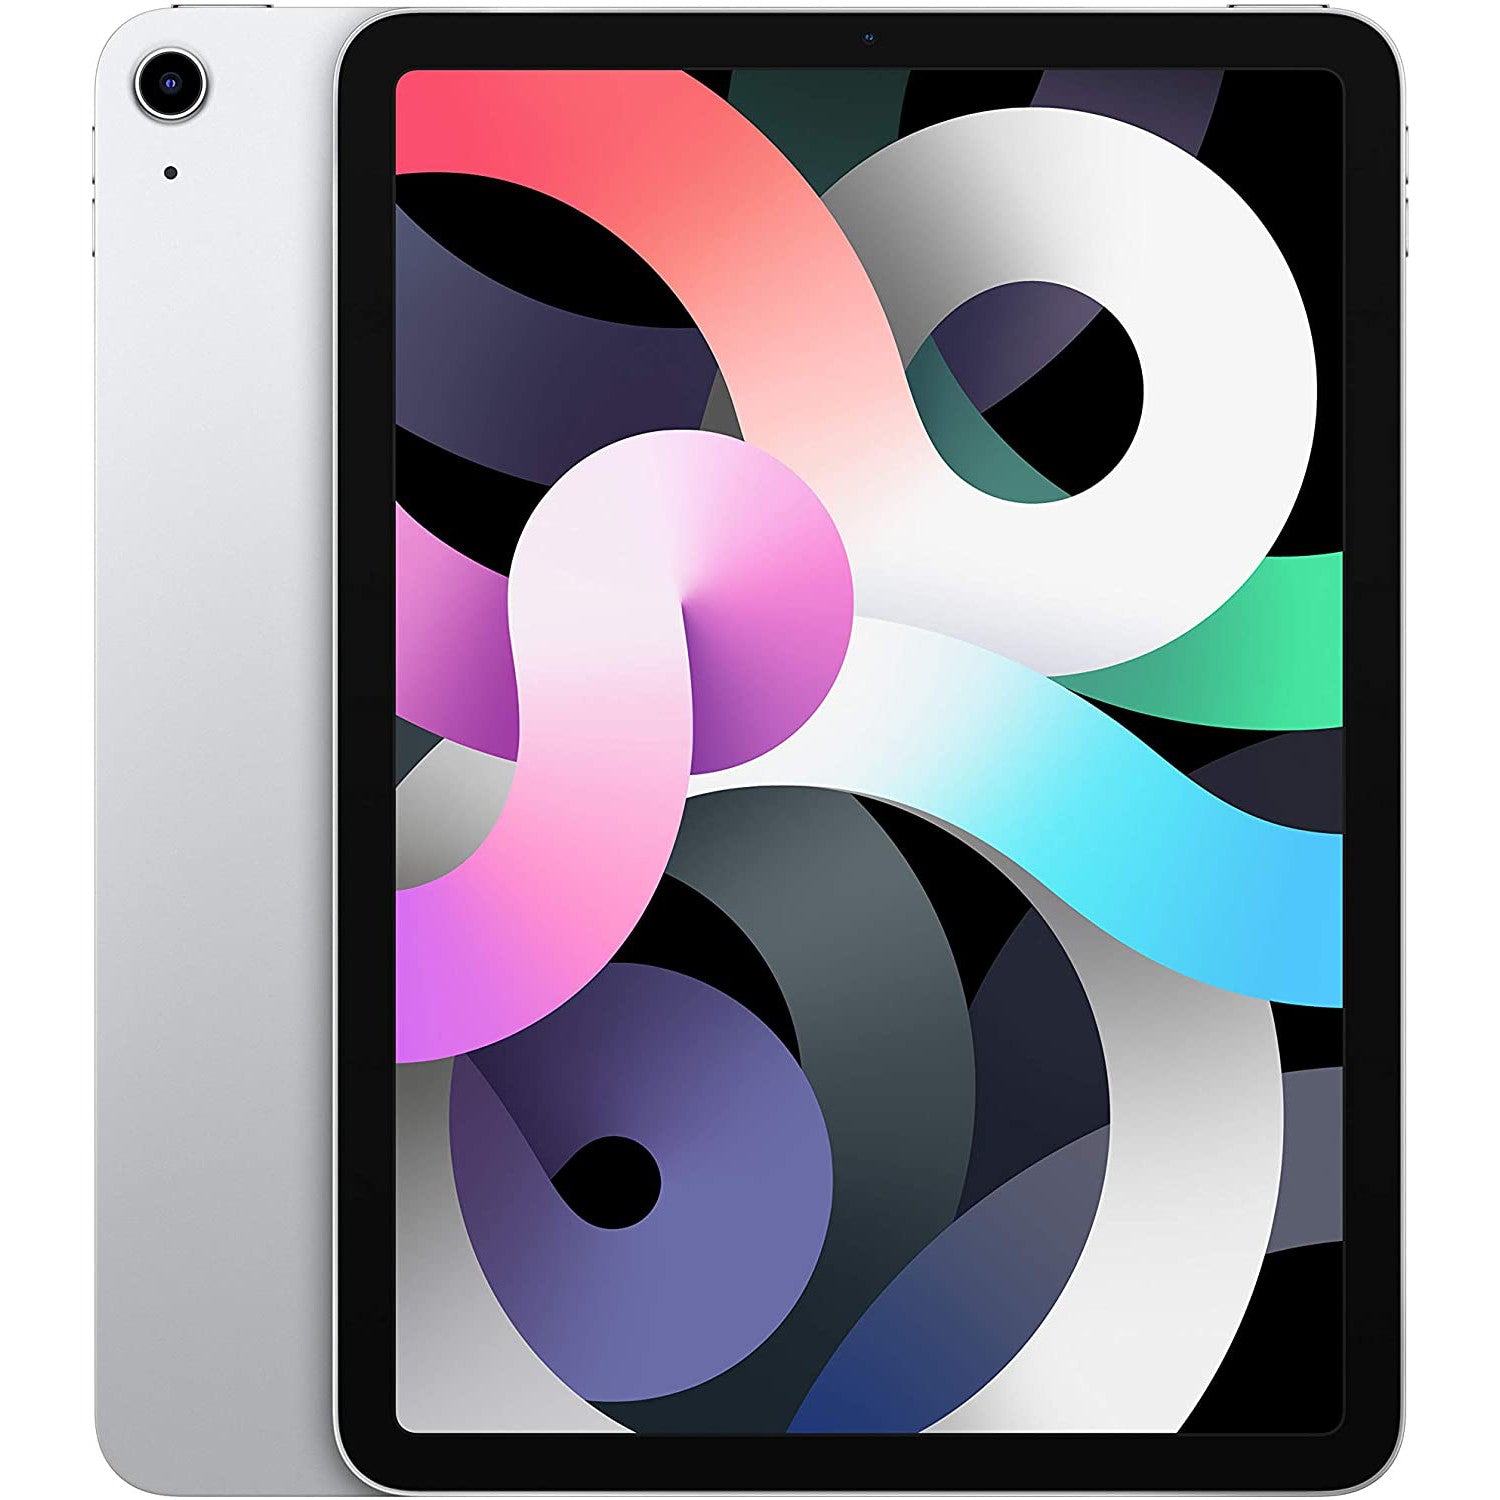 iPad Air 4 64GB WiFi - Silber - Makellos